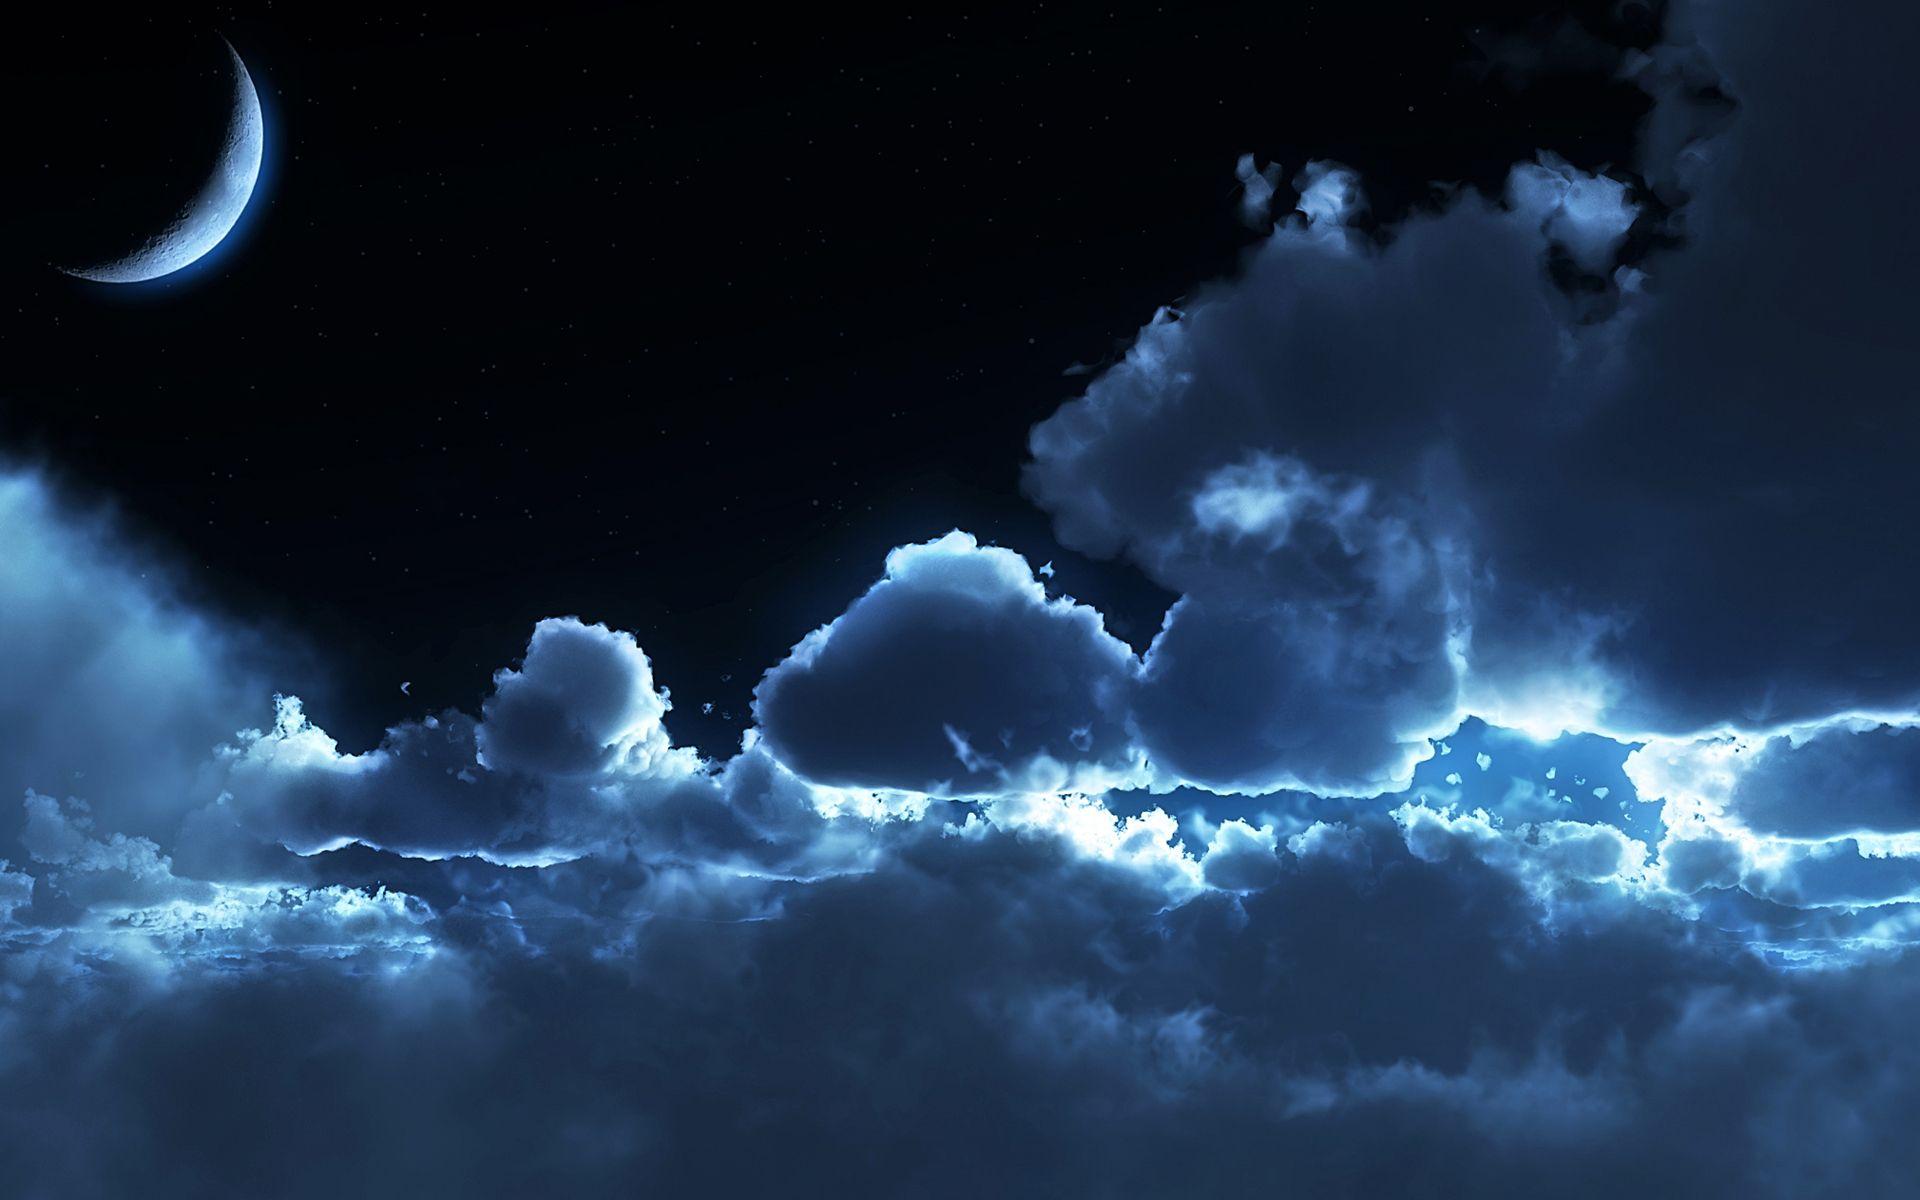 Wallpaper.wiki Beautiful Night Sky Wallpaper High Definition PIC